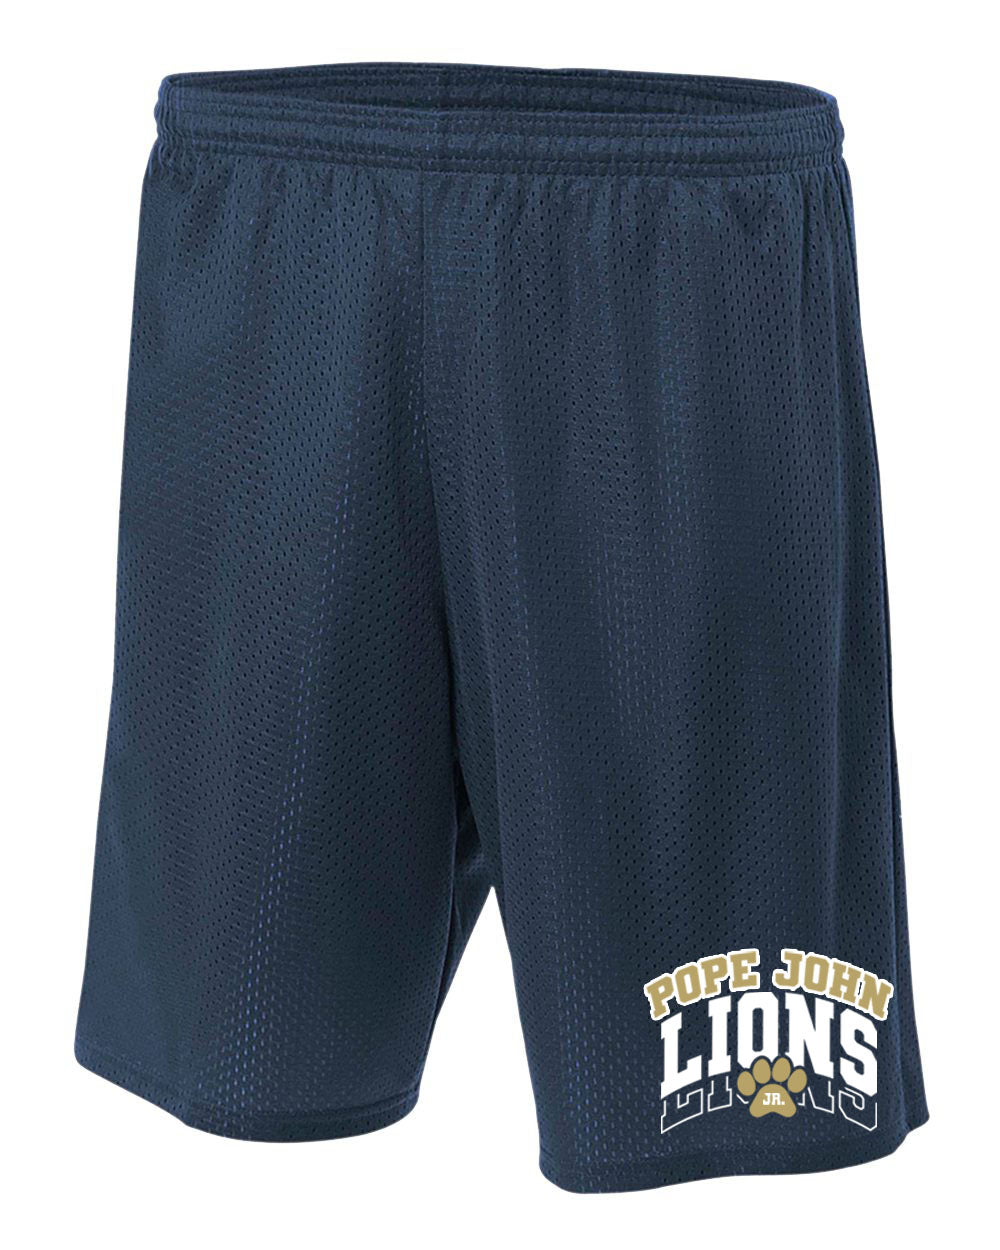 Lions Cheer Design 1 Mesh Shorts